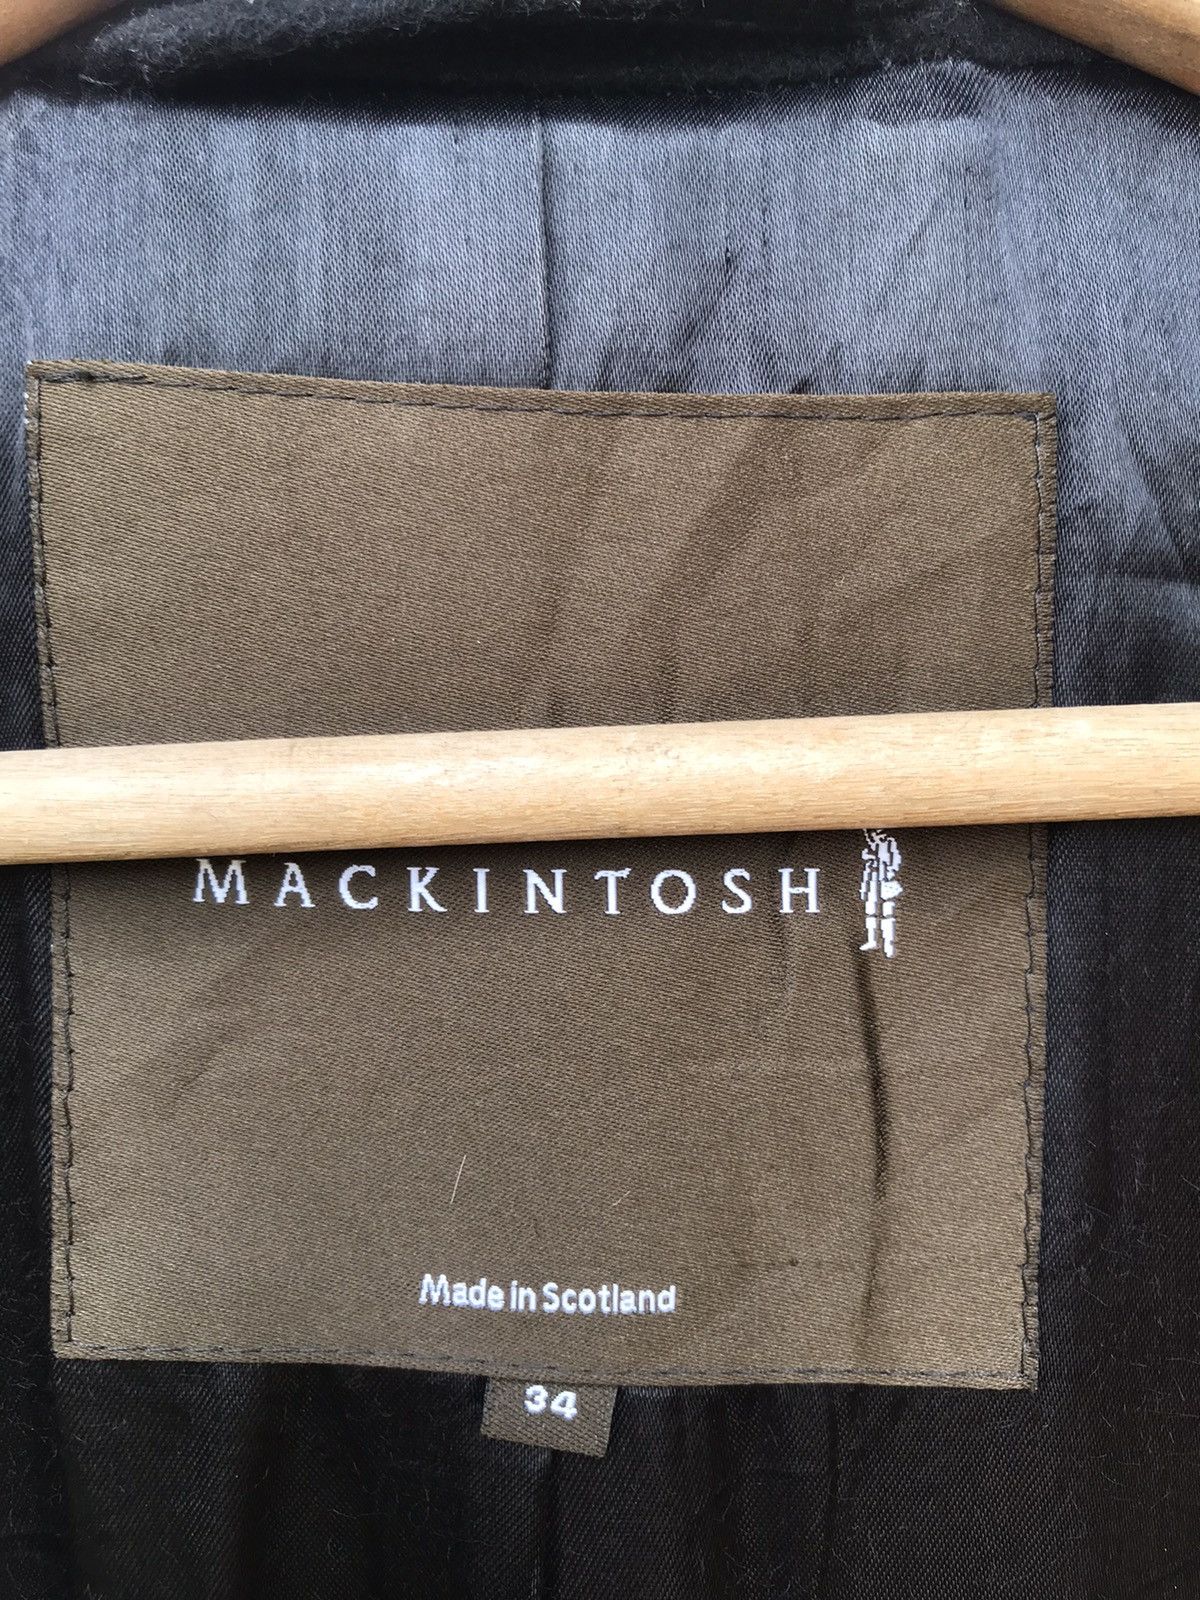 Mackintosh Wool Made in Scotland Long Coat Jacket - 3